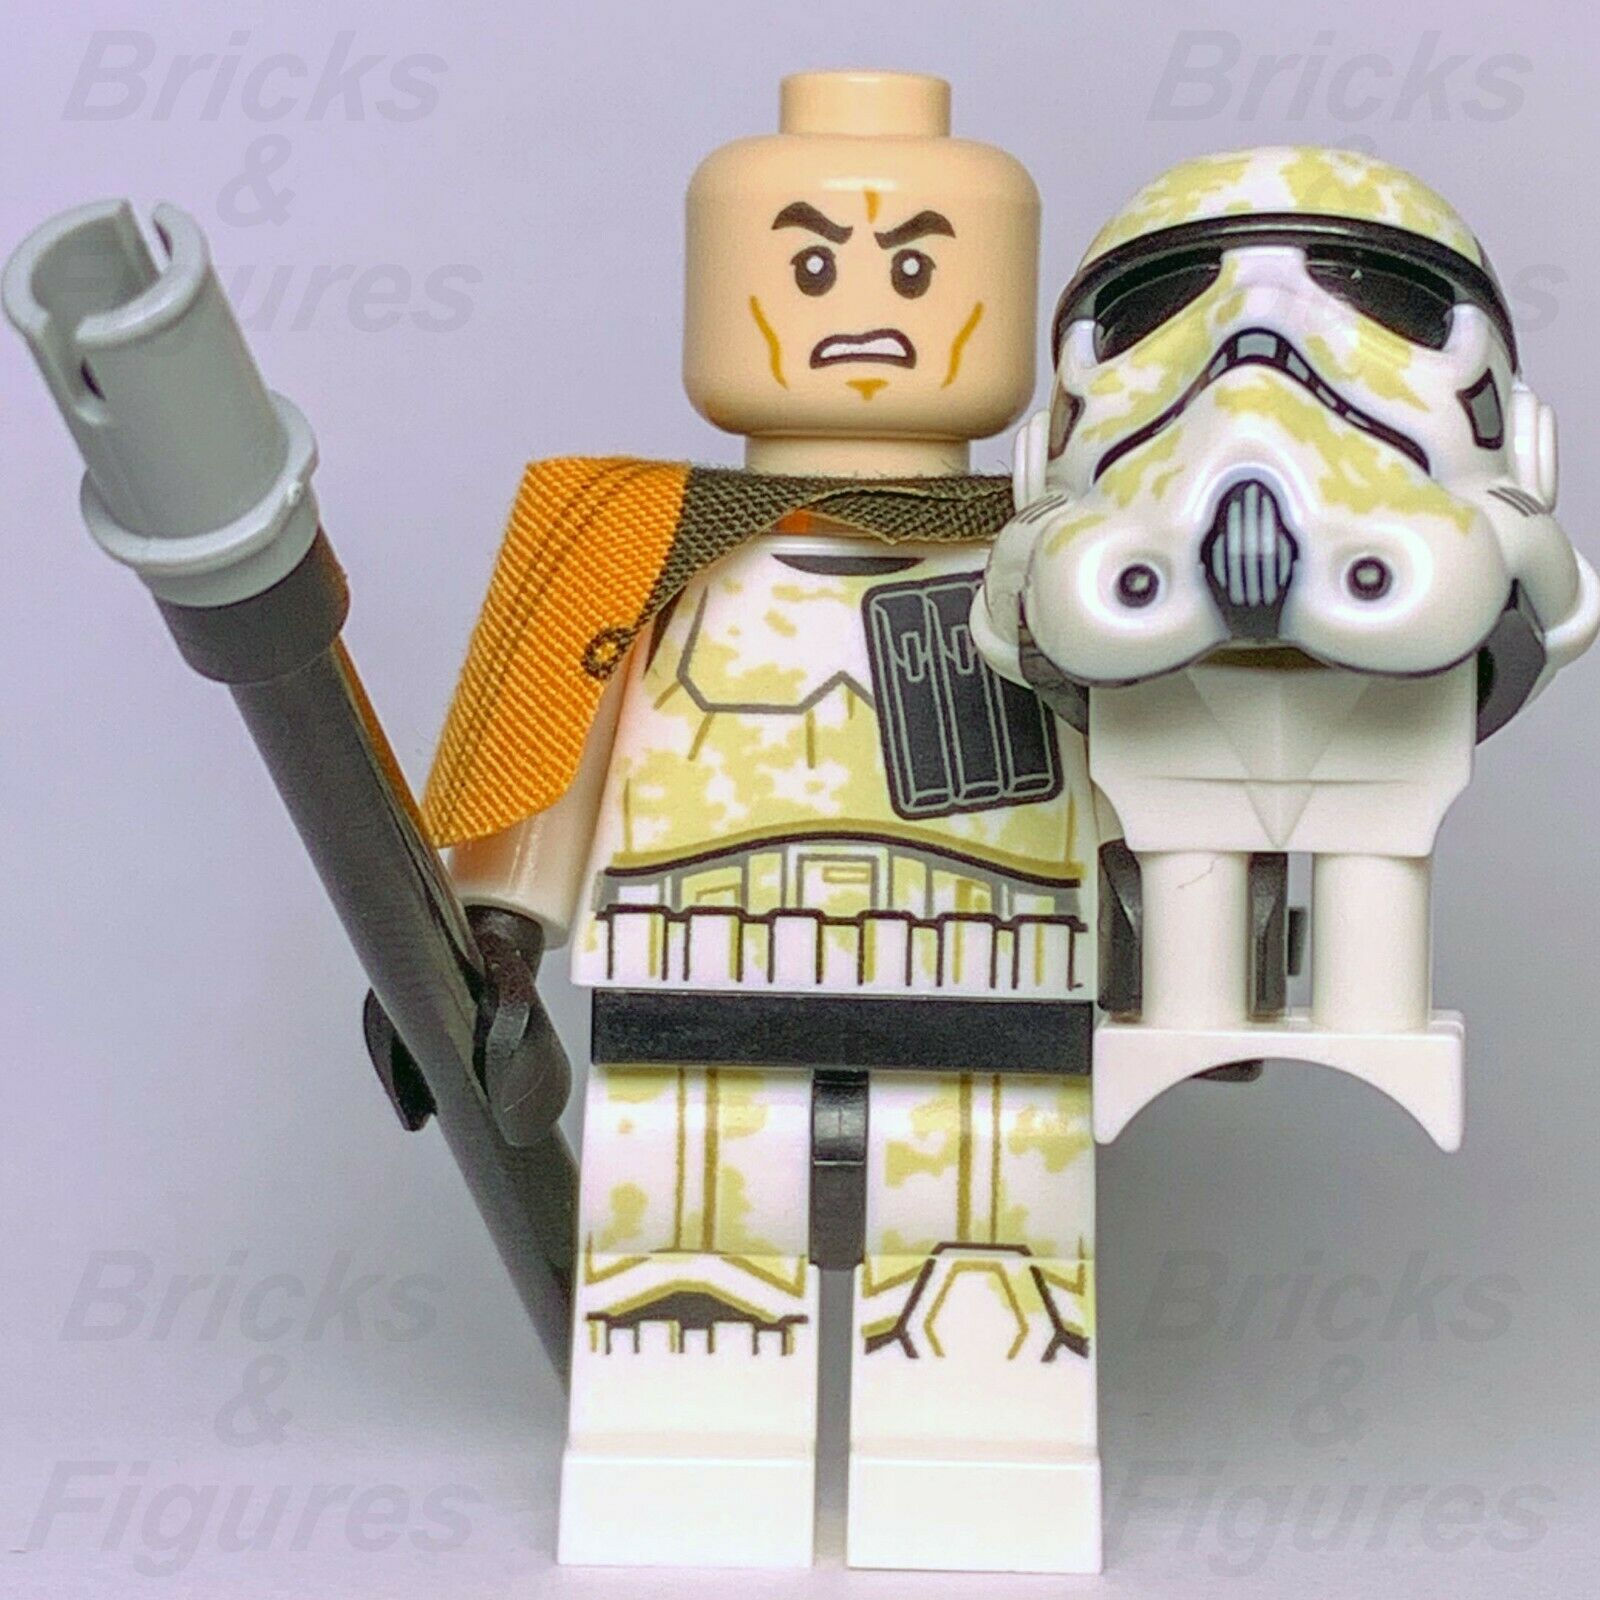 New Star Wars LEGO Imperial Sandtrooper Captain Trooper Minifigure from 75228 - Bricks & Figures